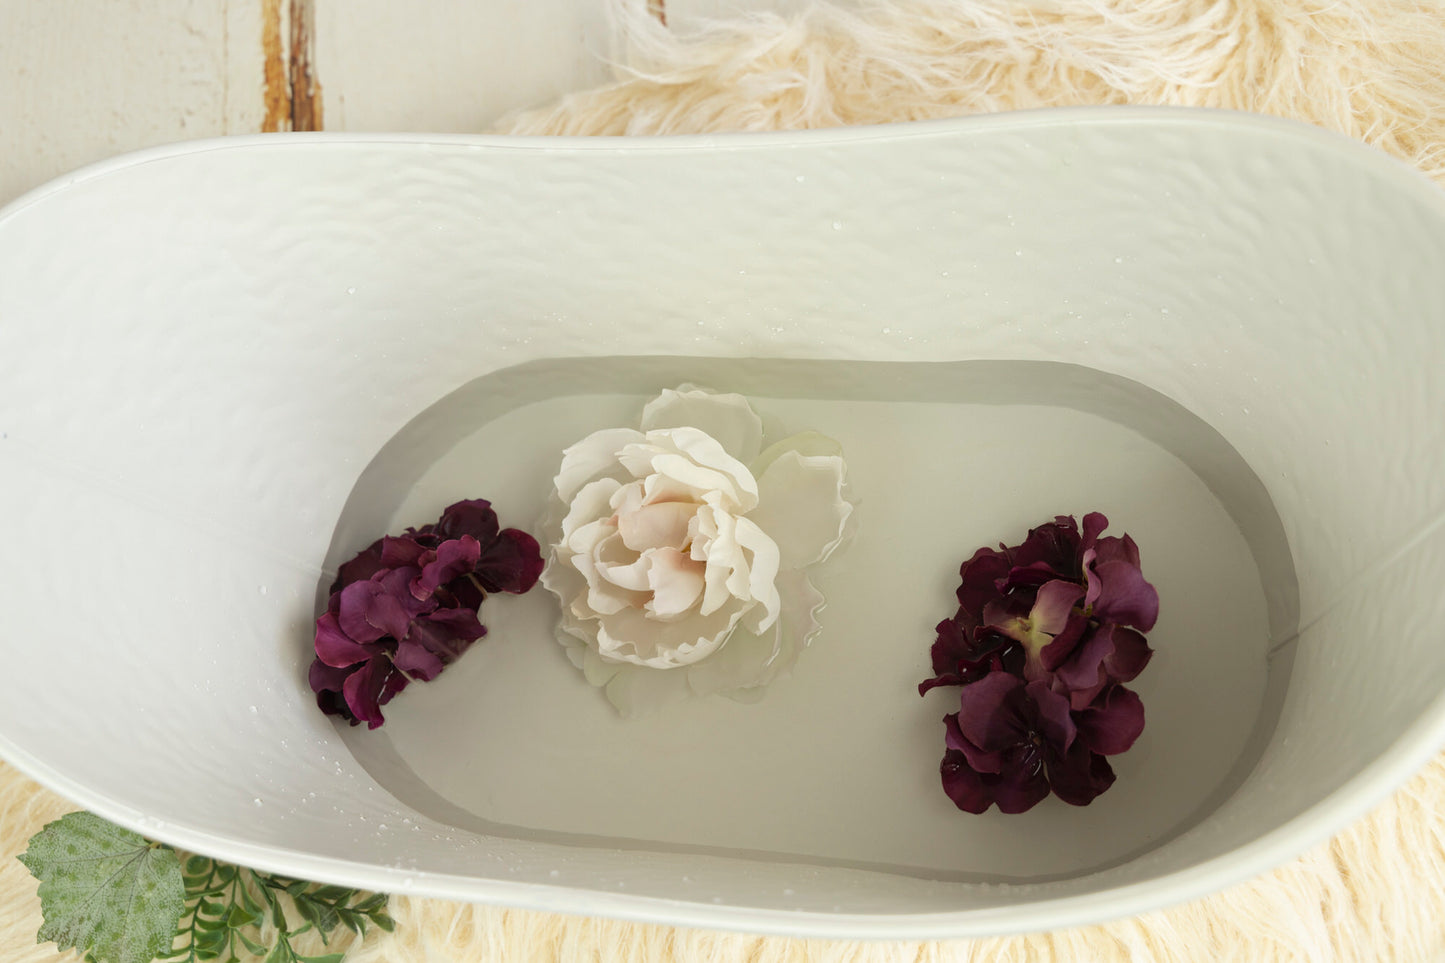 PRE-ORDER Footed Vintage Bathtub - Bumpy Textured - White